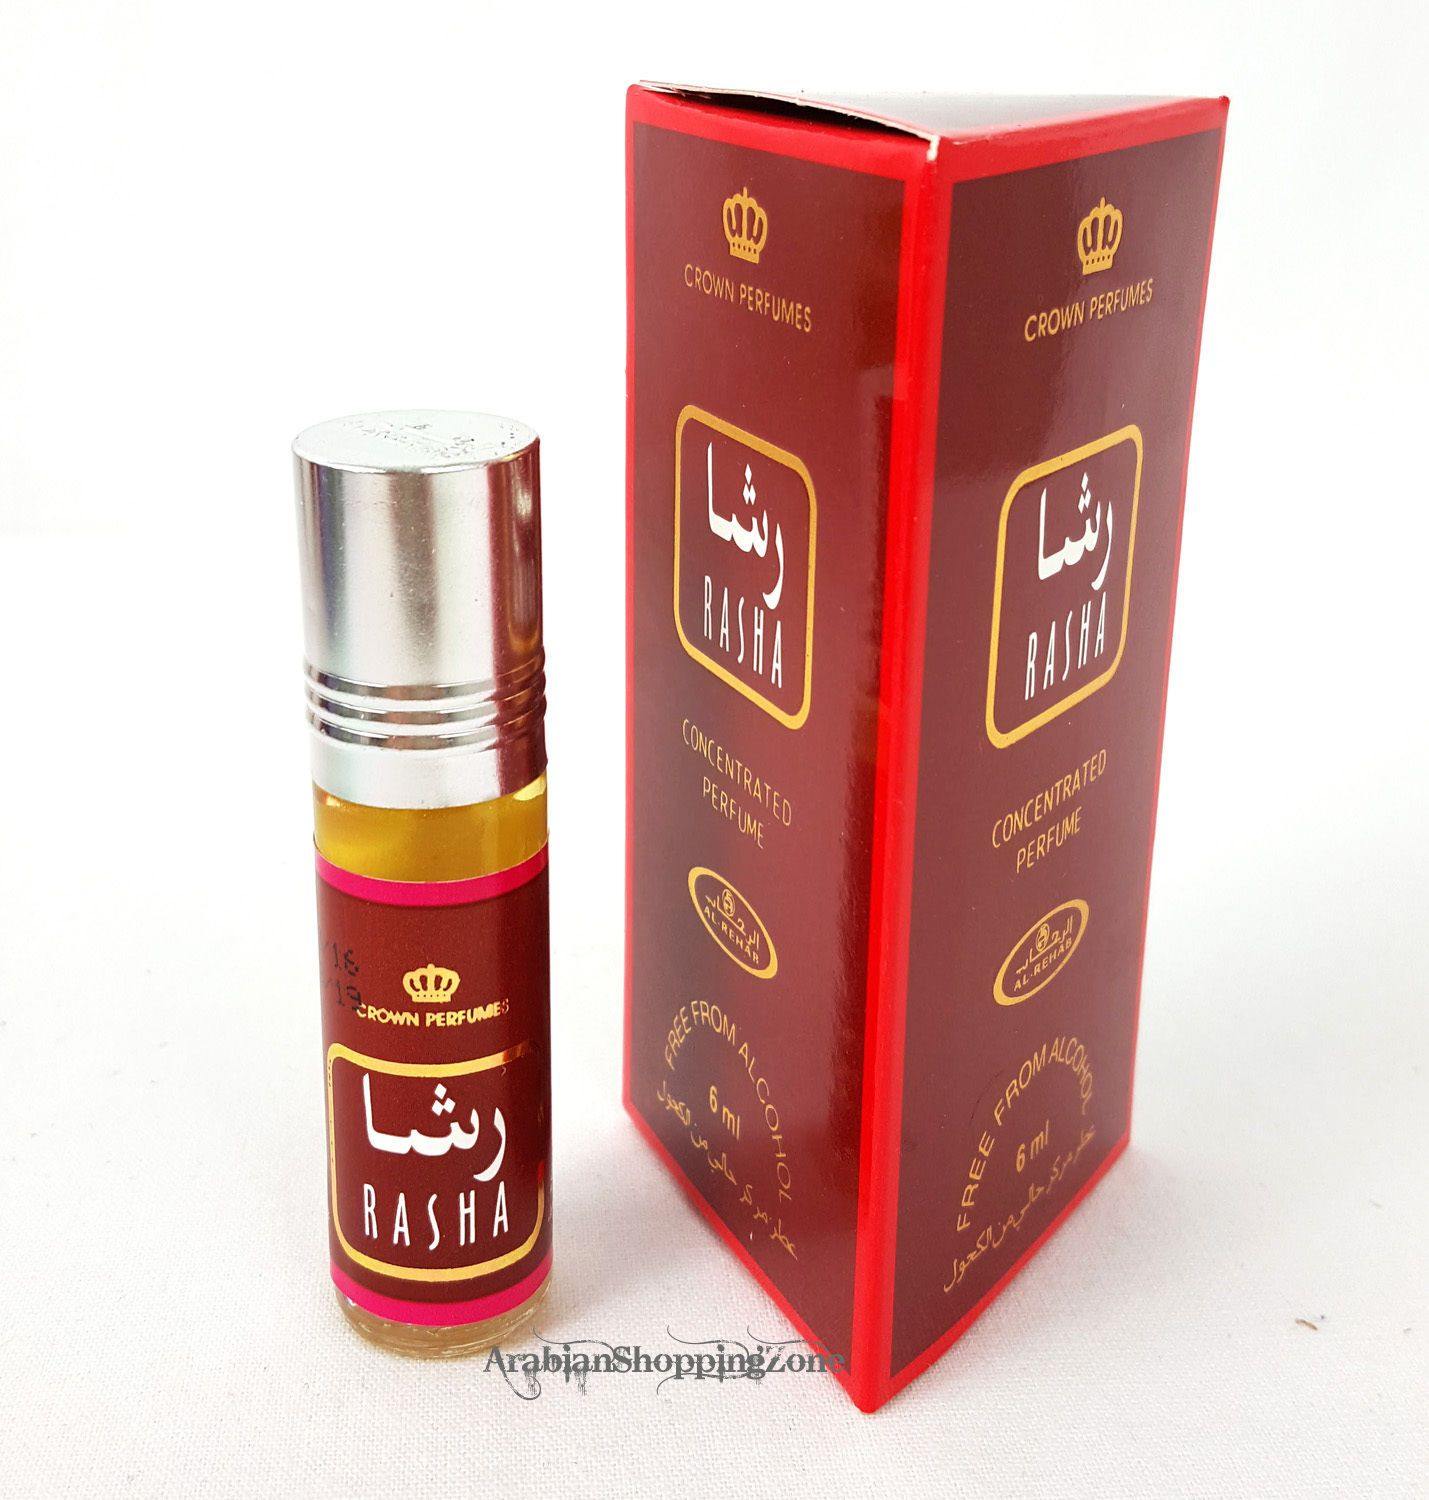 AL Rehab Perfume Concentrated Perfume Oil Attar 6ml - Islamic Shop